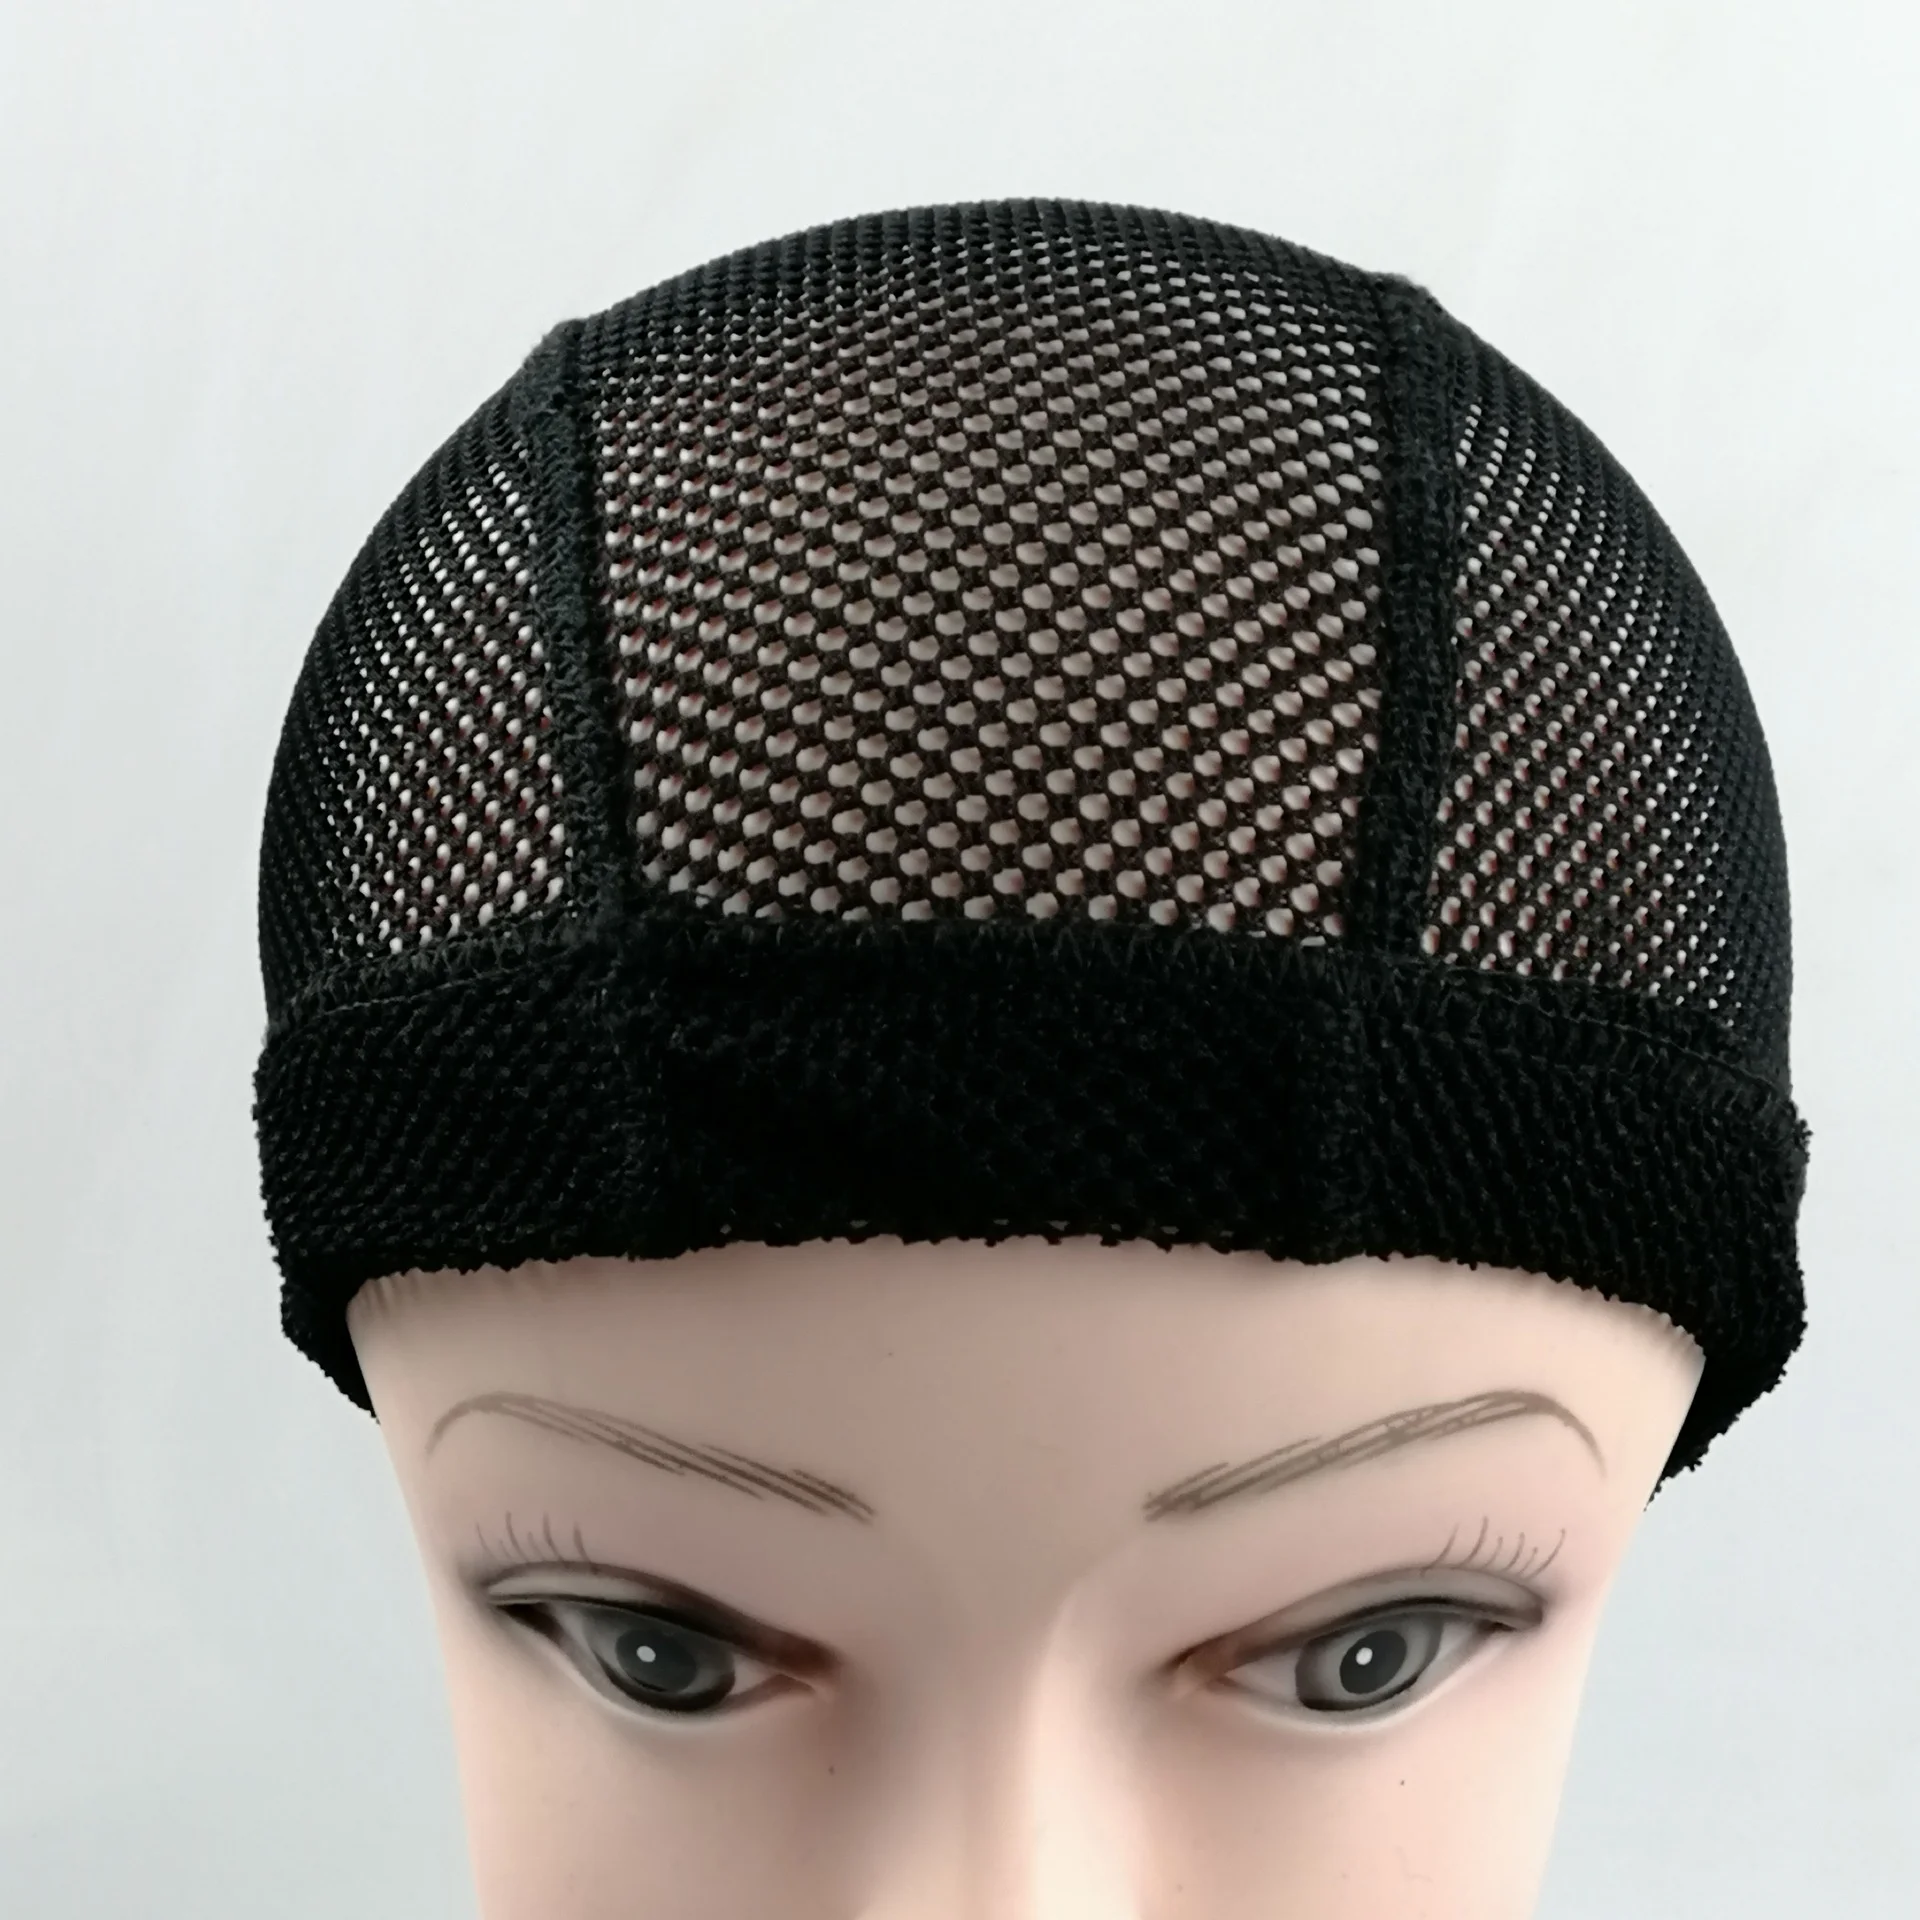 Wholesale Cheap Black Weaving Fish Net Wig Cap Adjustable Stretch